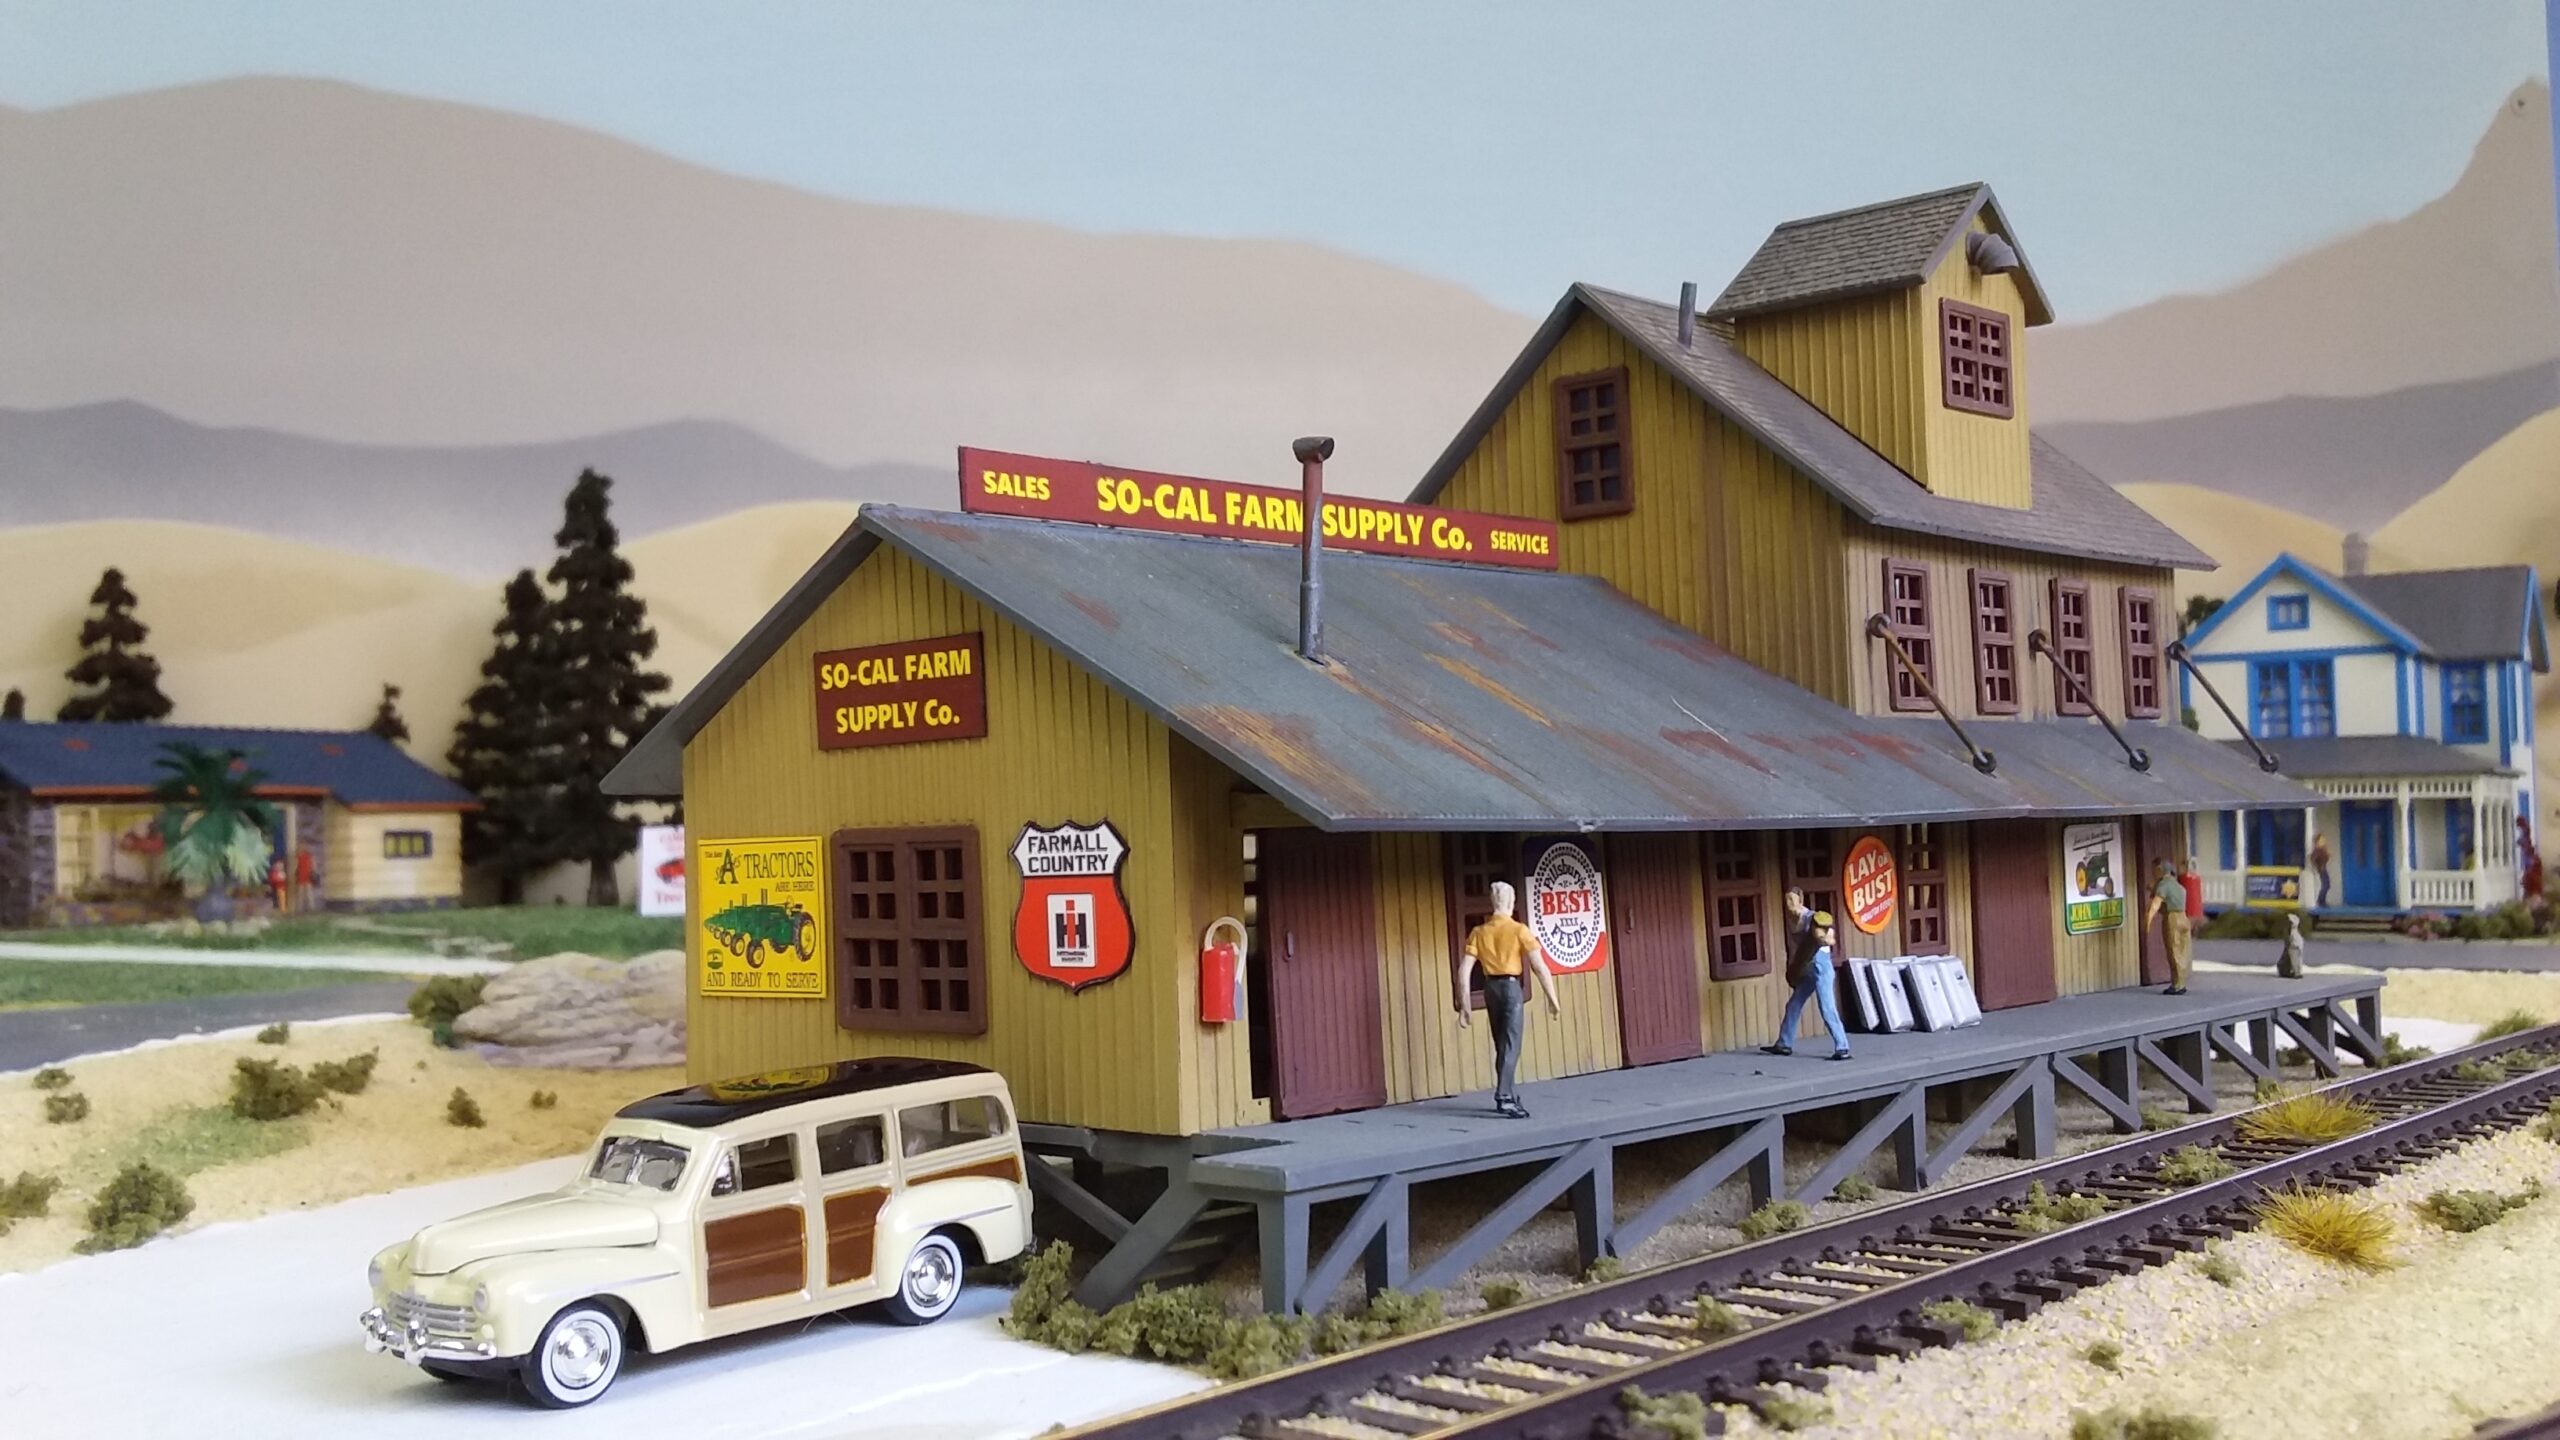 So-Cal Farm Supply|Santa Fe Railway, Los Angeles Division